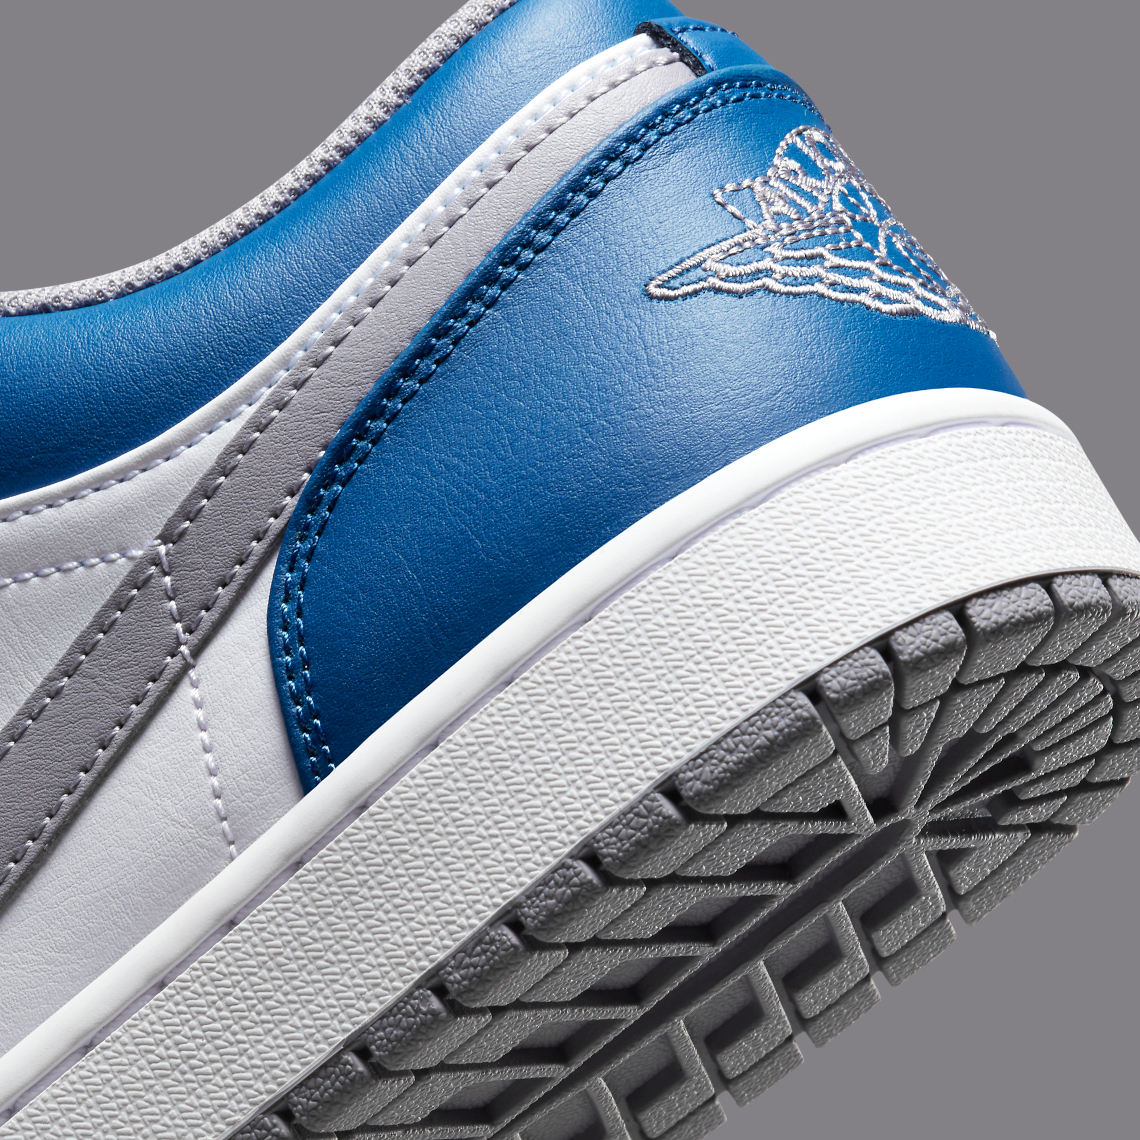 Official Look At The Air Jordan 1 Low True Blue - Sneaker News